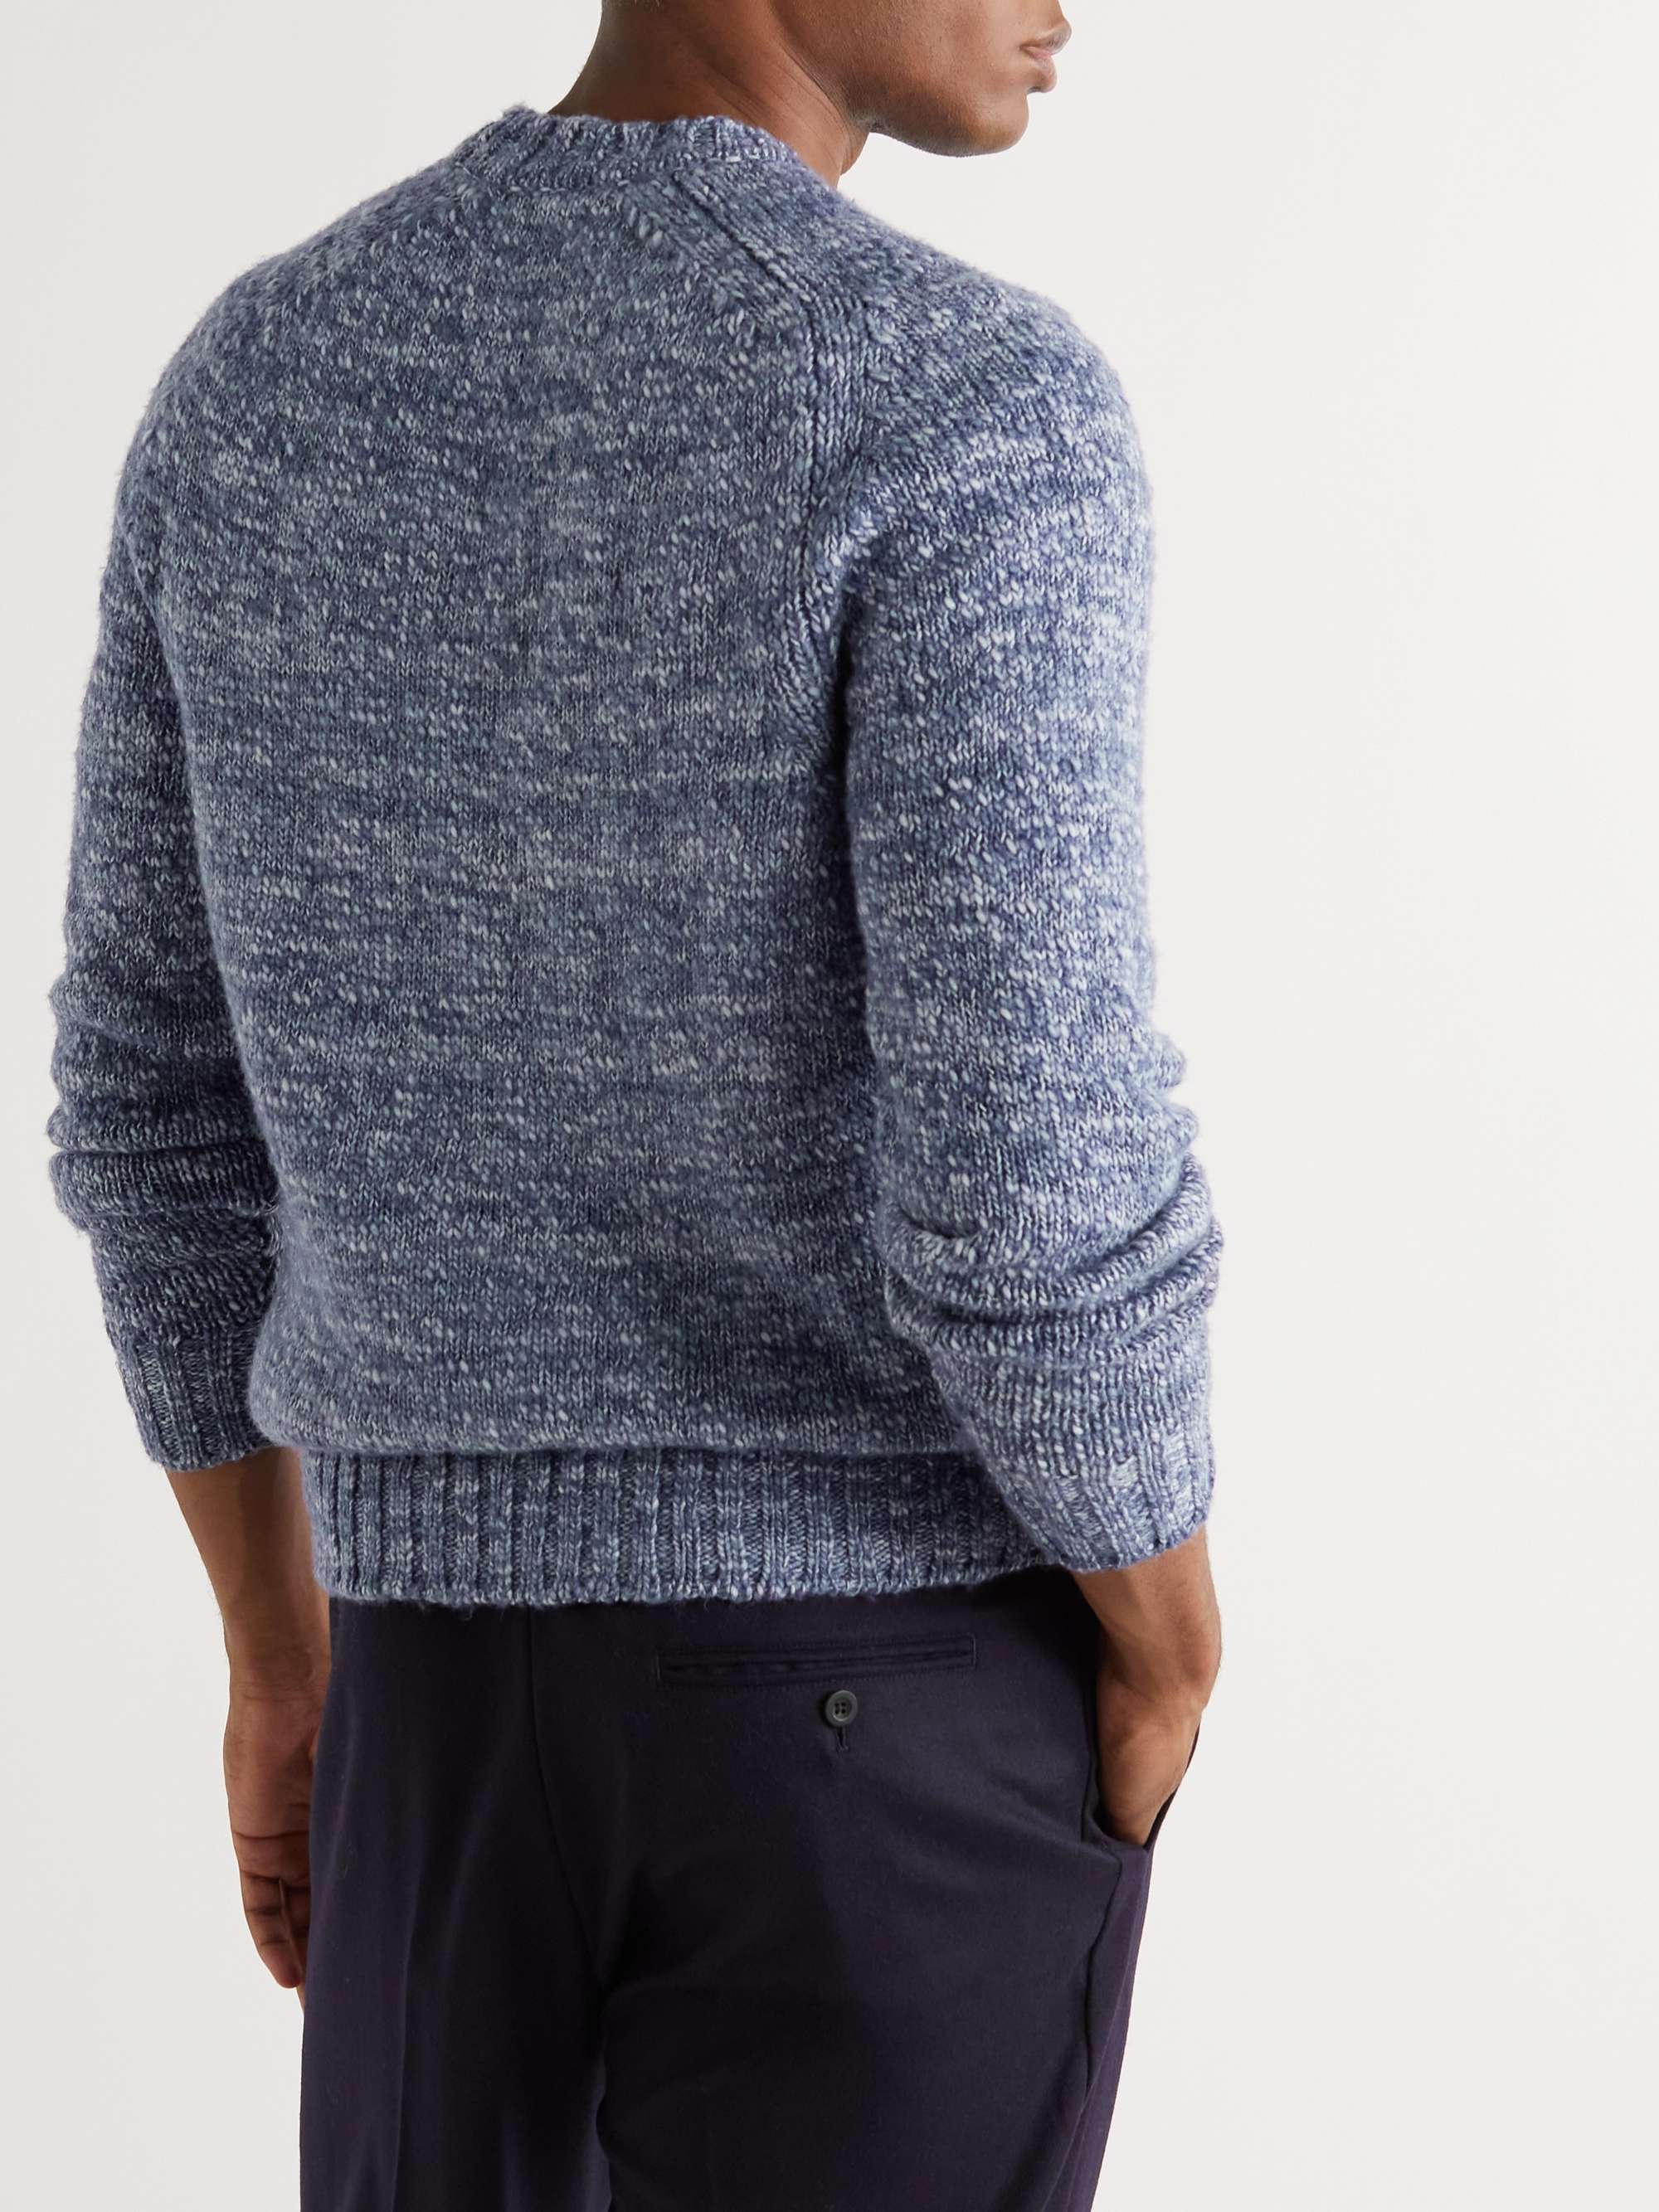 MR P. Wool Sweater | MR PORTER